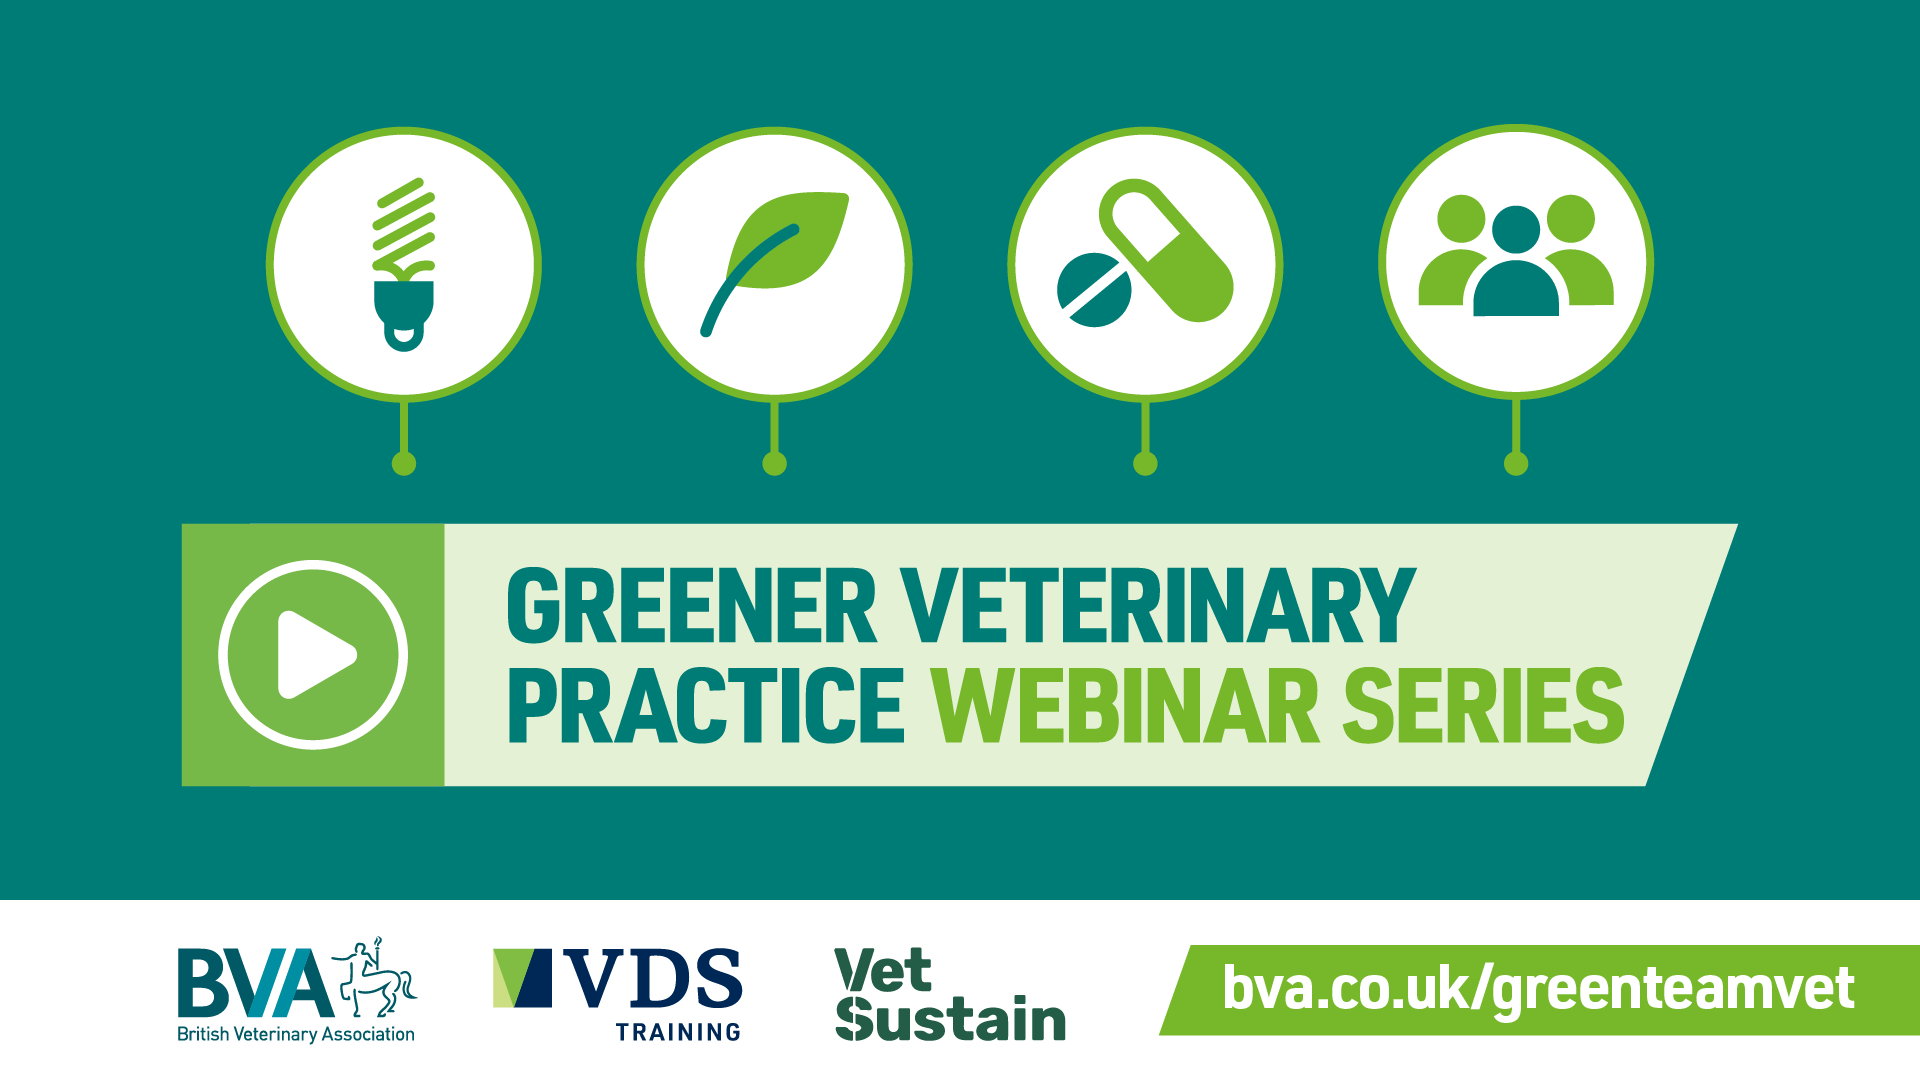 Greener veterinary practice webinar series Image